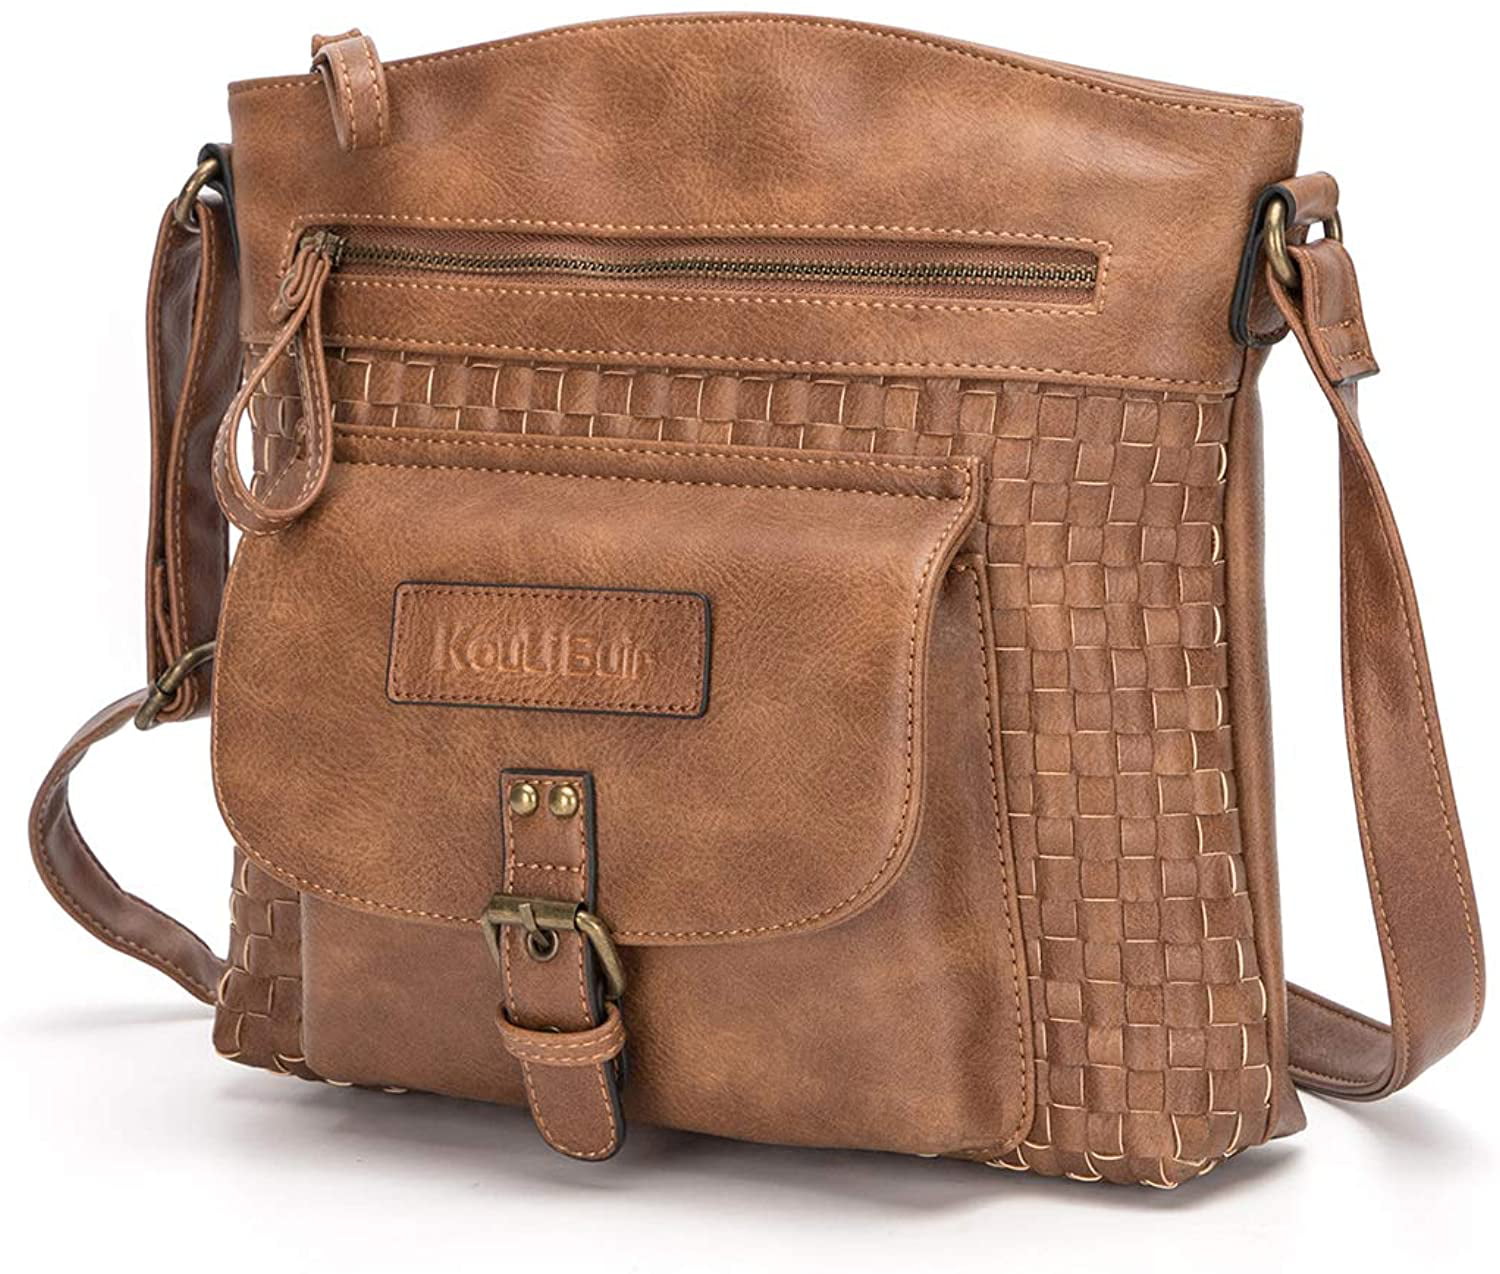 KouLi Buir Crossbody Purses for Women PU Leather Shoulder Handbags Sling Bag Crossboby Bags Medium Multi Pockets 